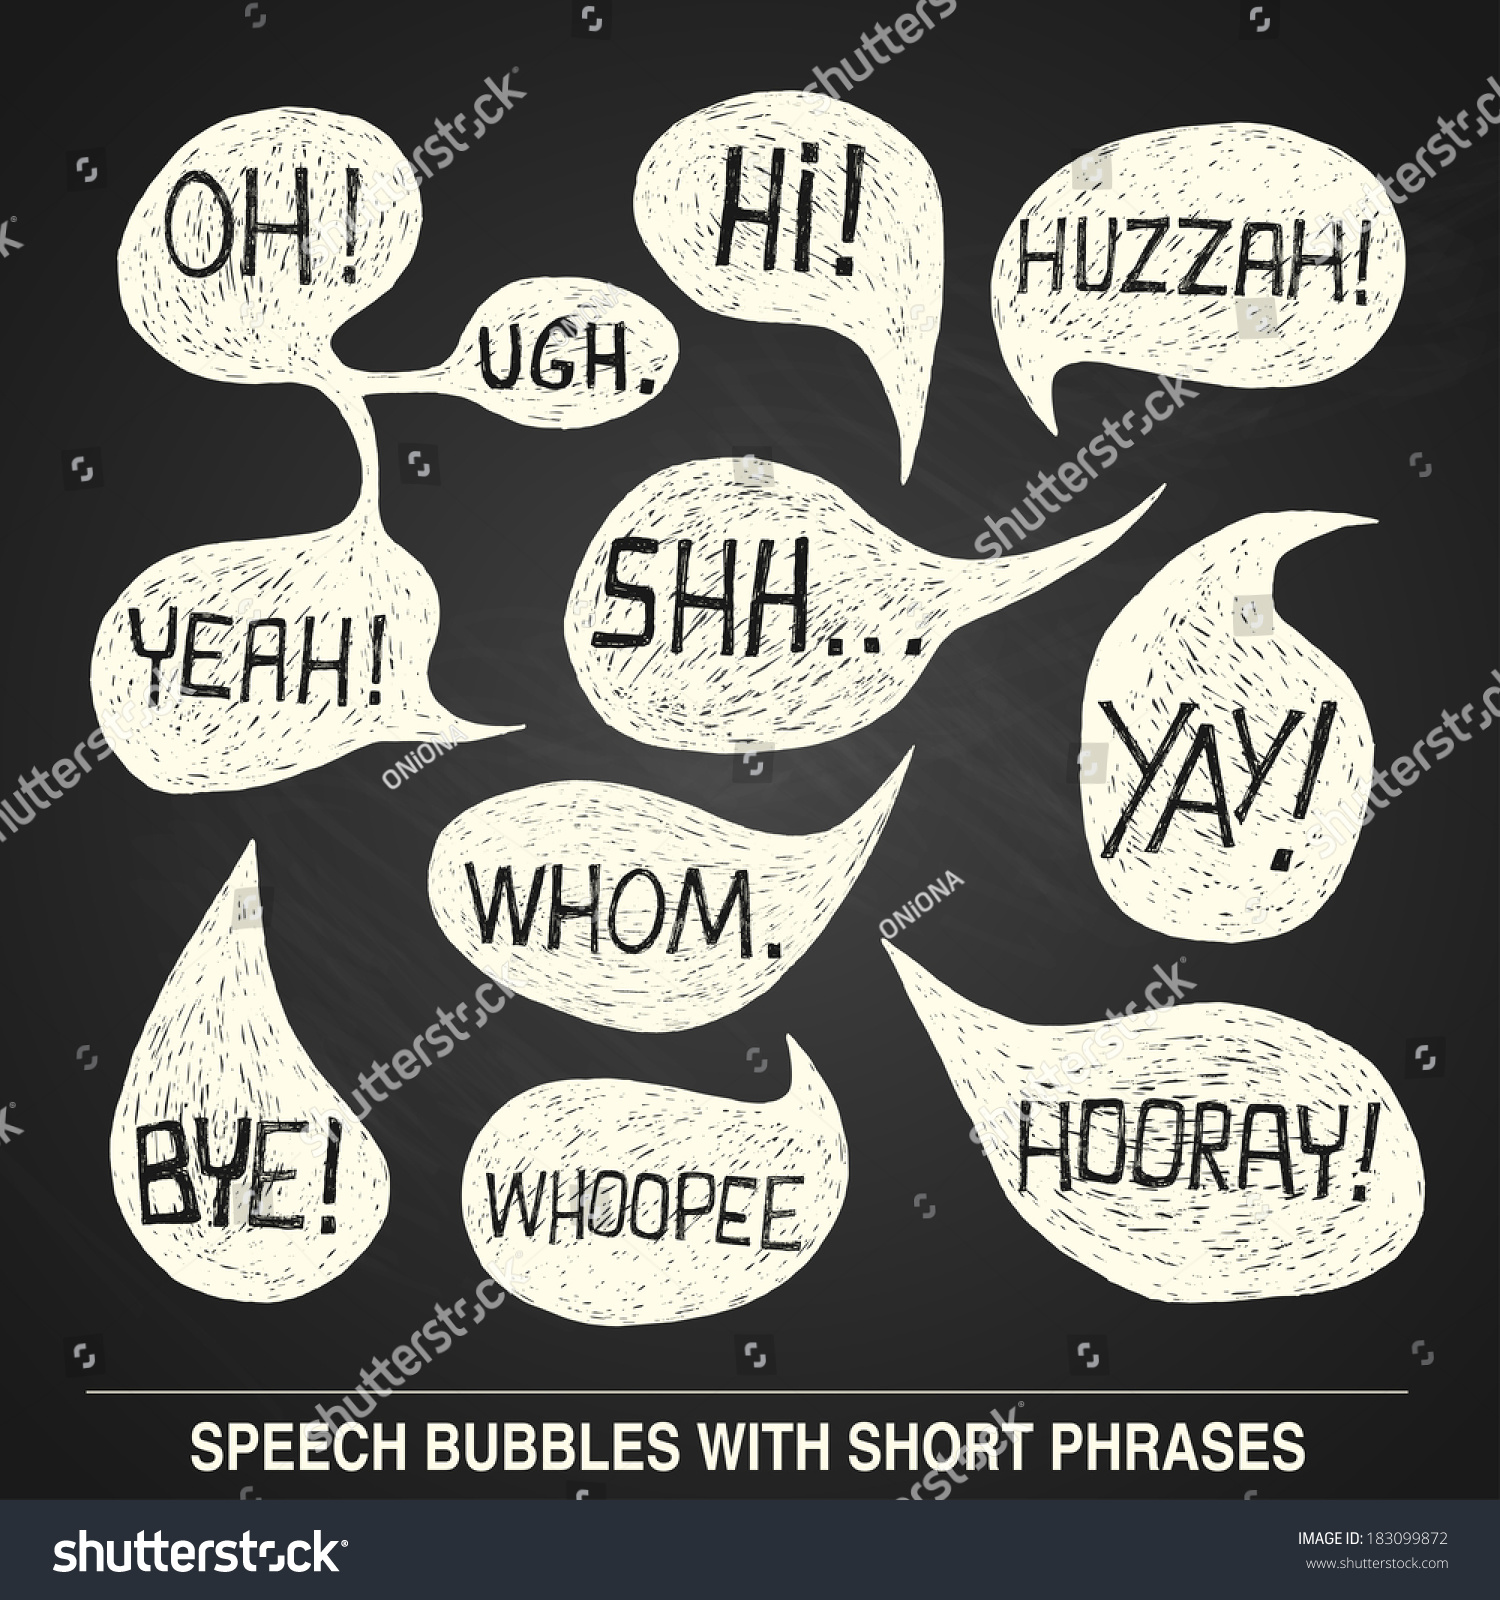 Short phrases